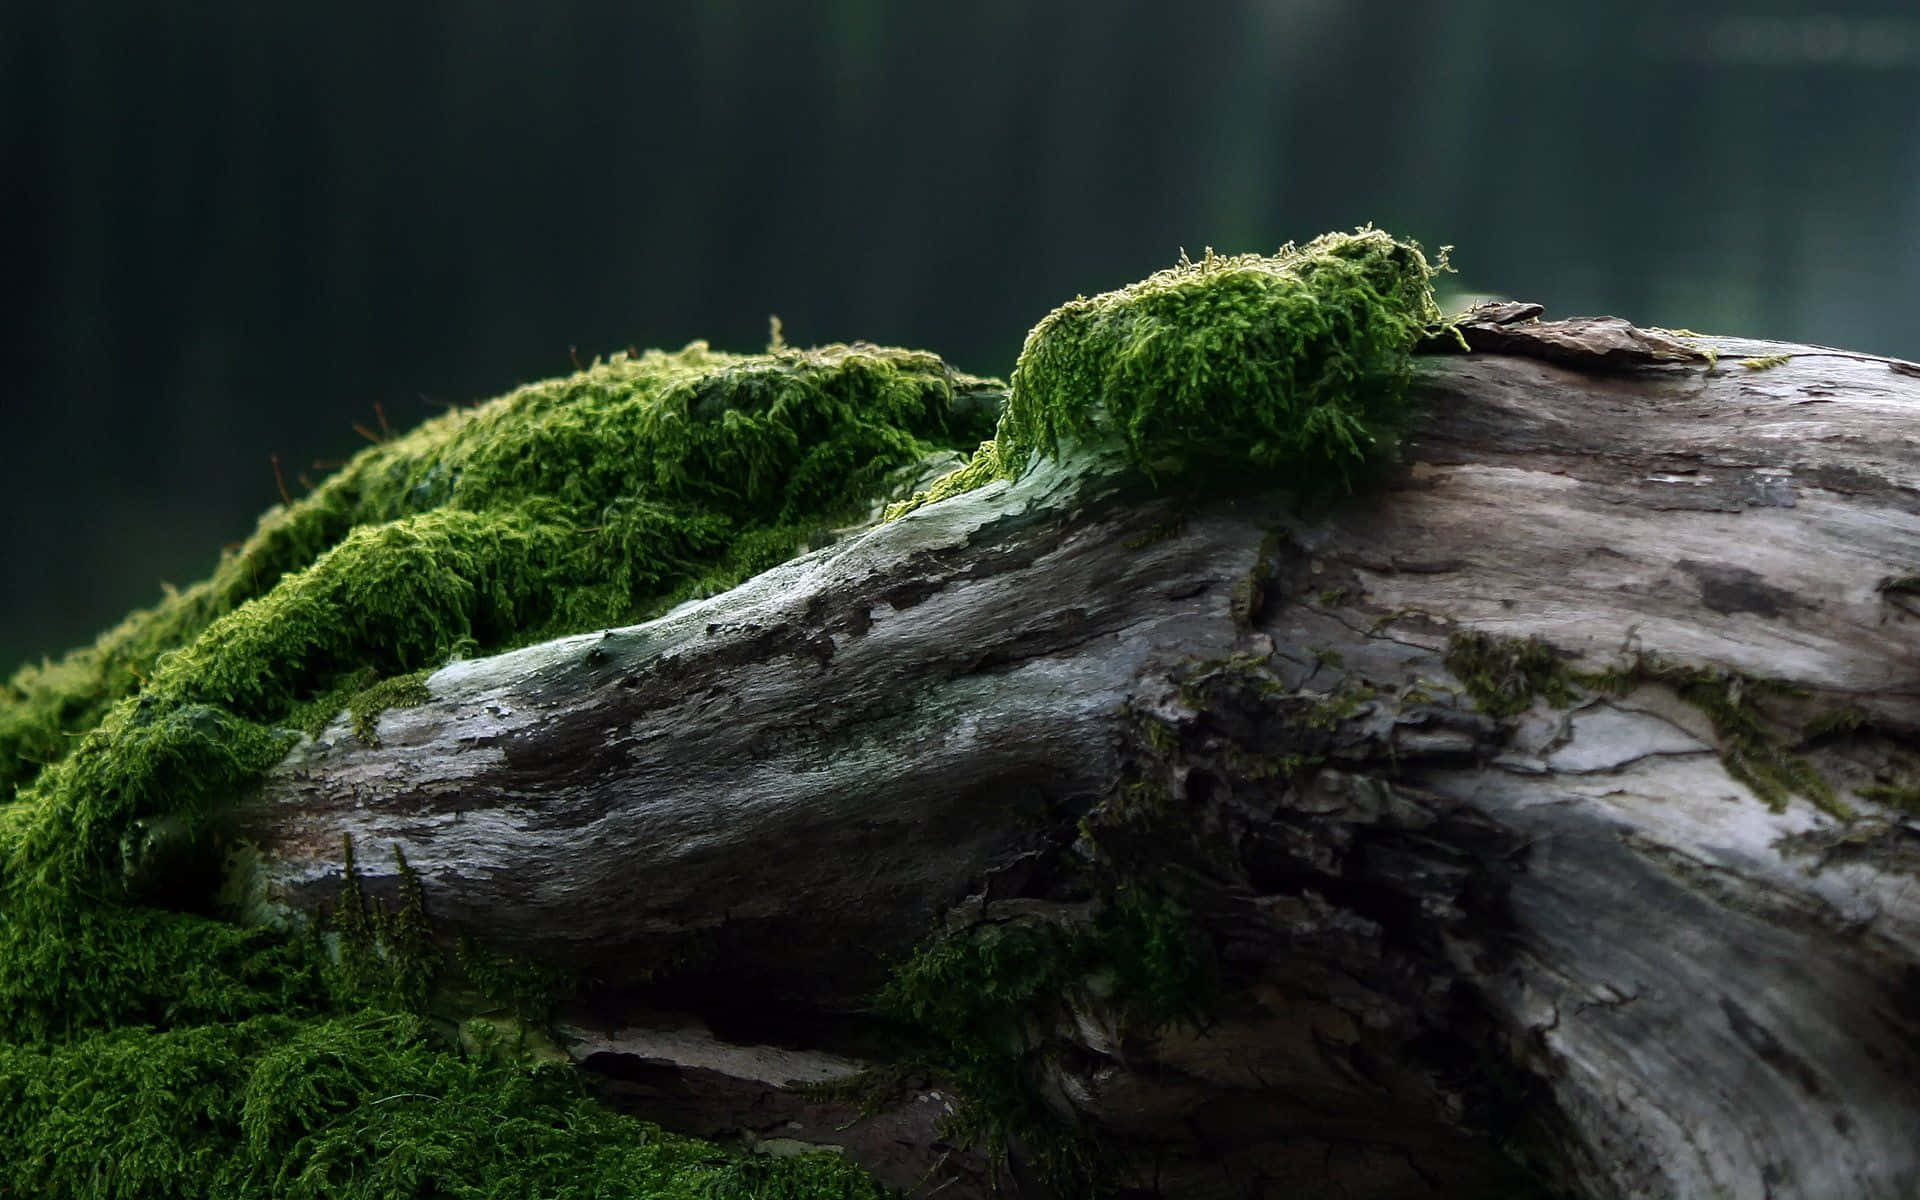 Captivating Close-up Of Vibrant Green Moss